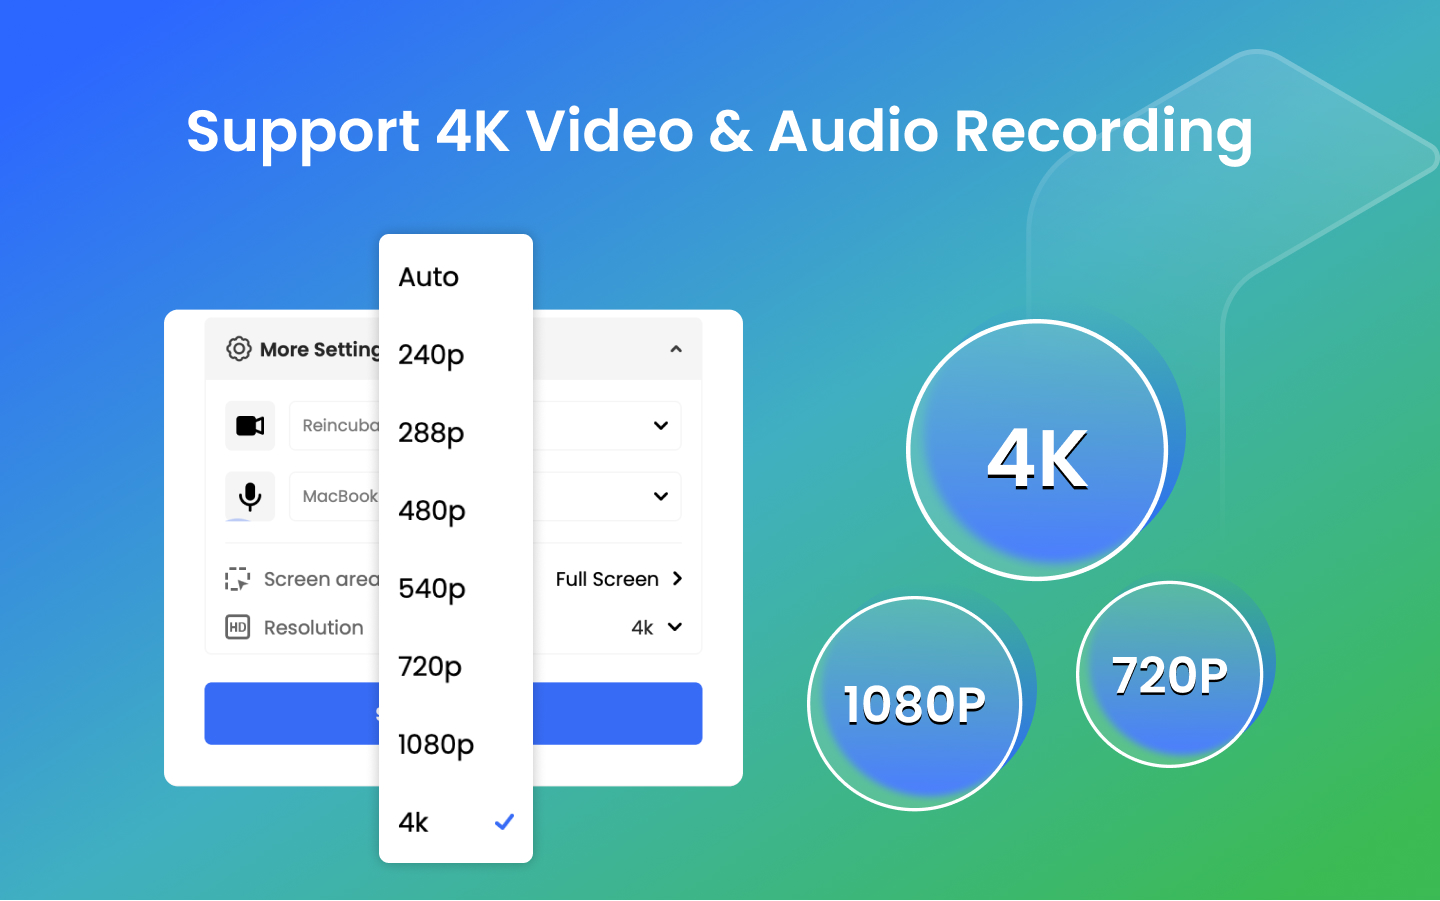 Support 4K video & audio recording